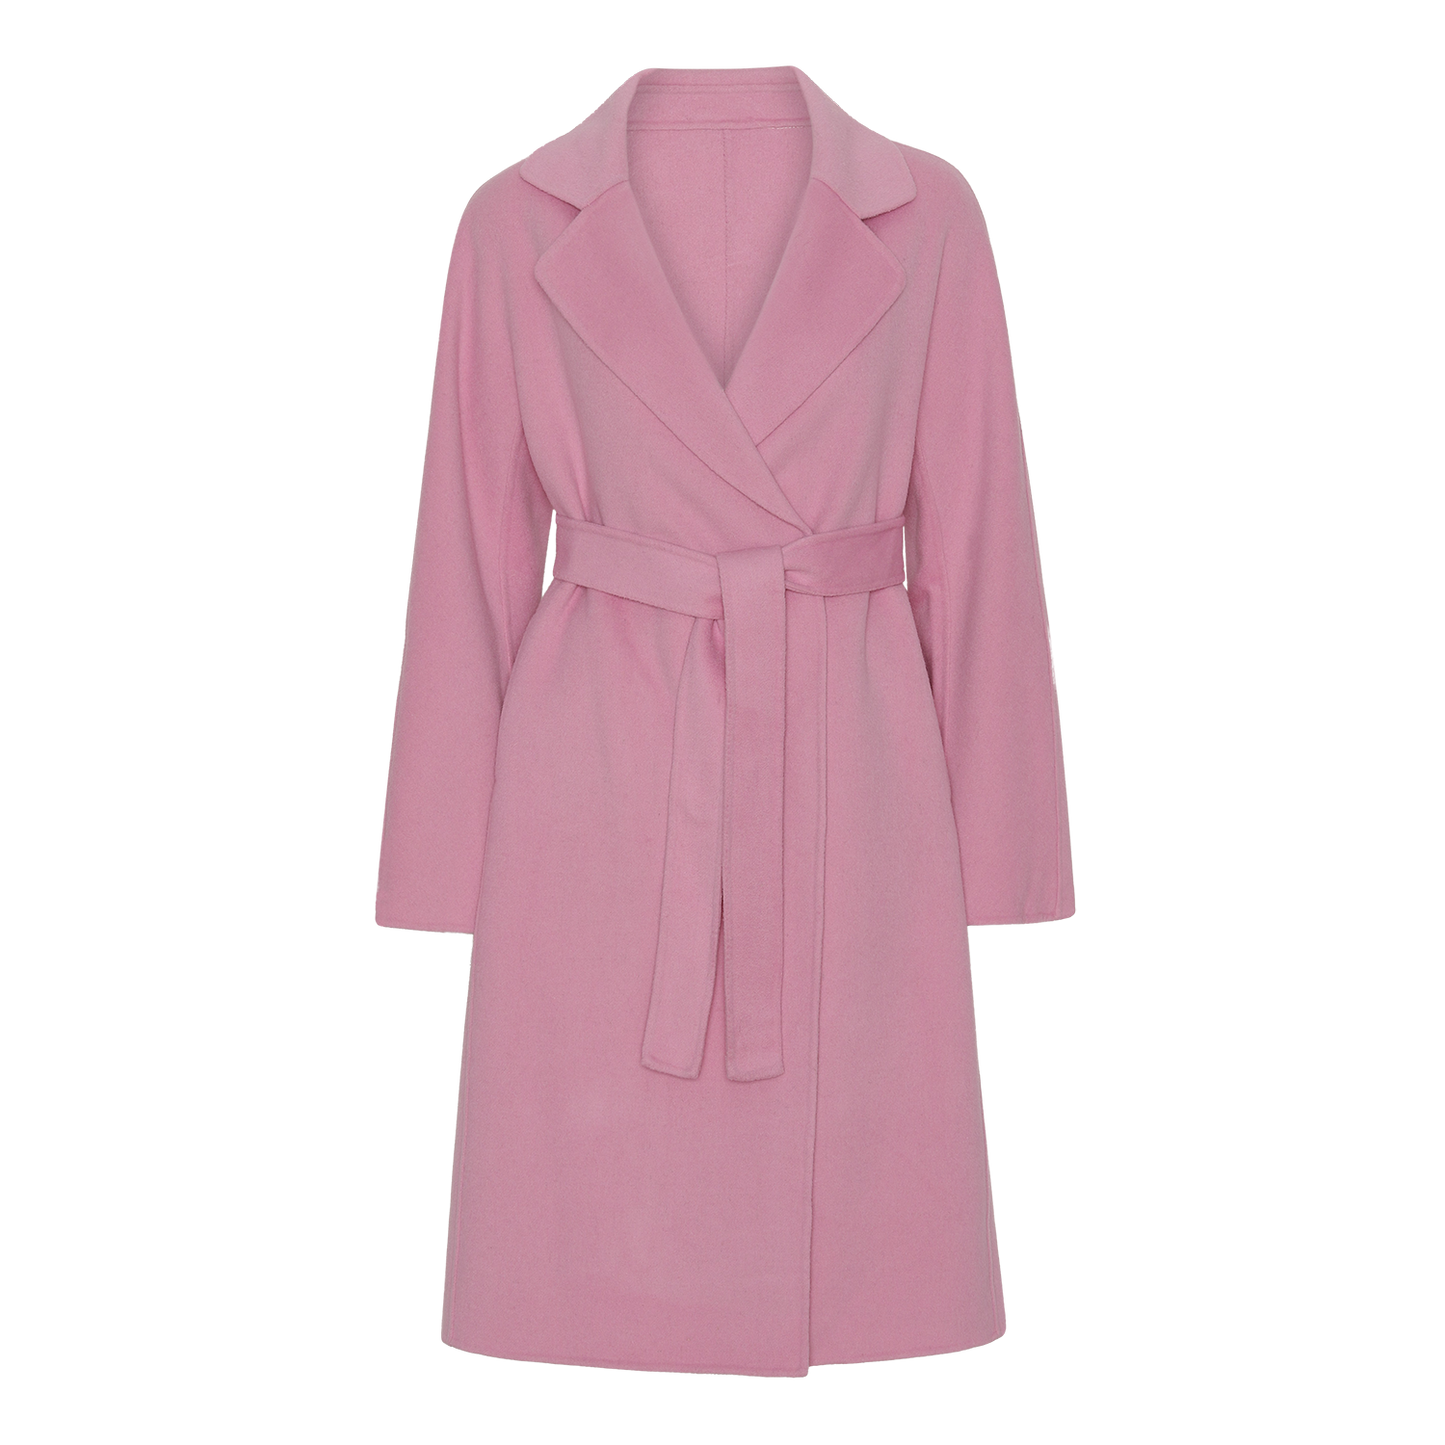 Claudette Merino Wool Coat Long Light Pink - Sample